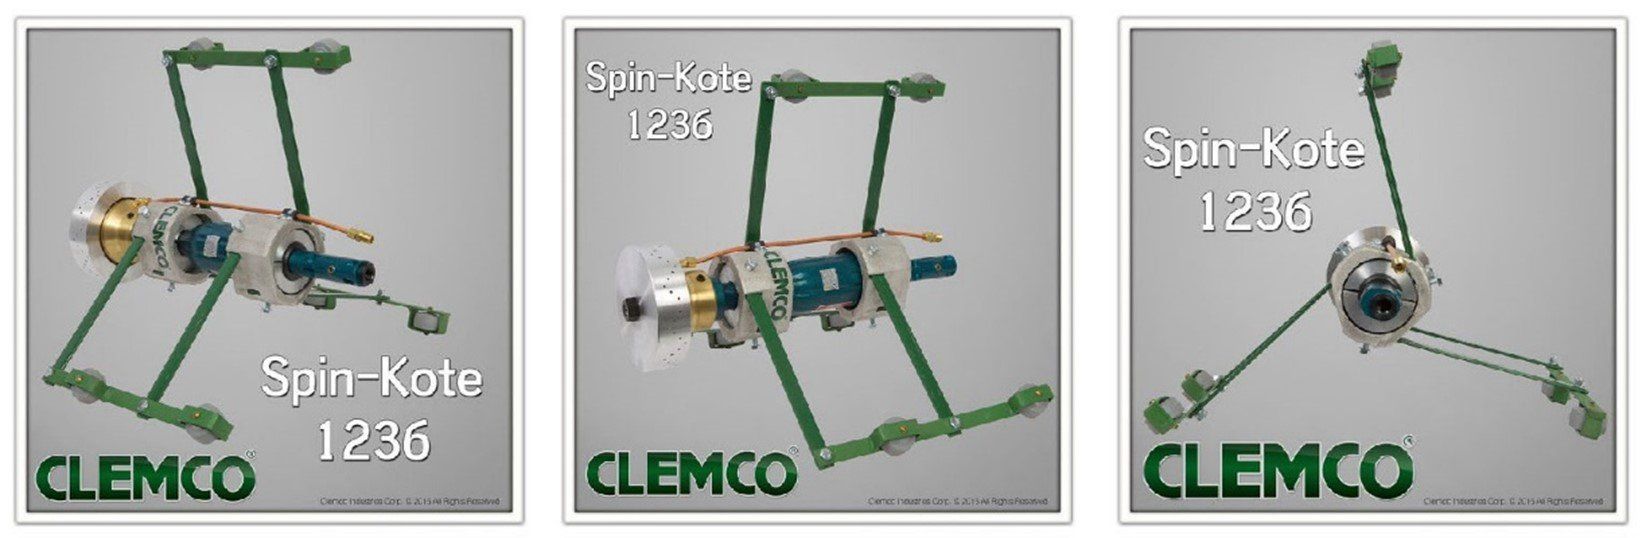 Spin-Kote 1236 — Houston, TX — T-Tex Industries LLC GP